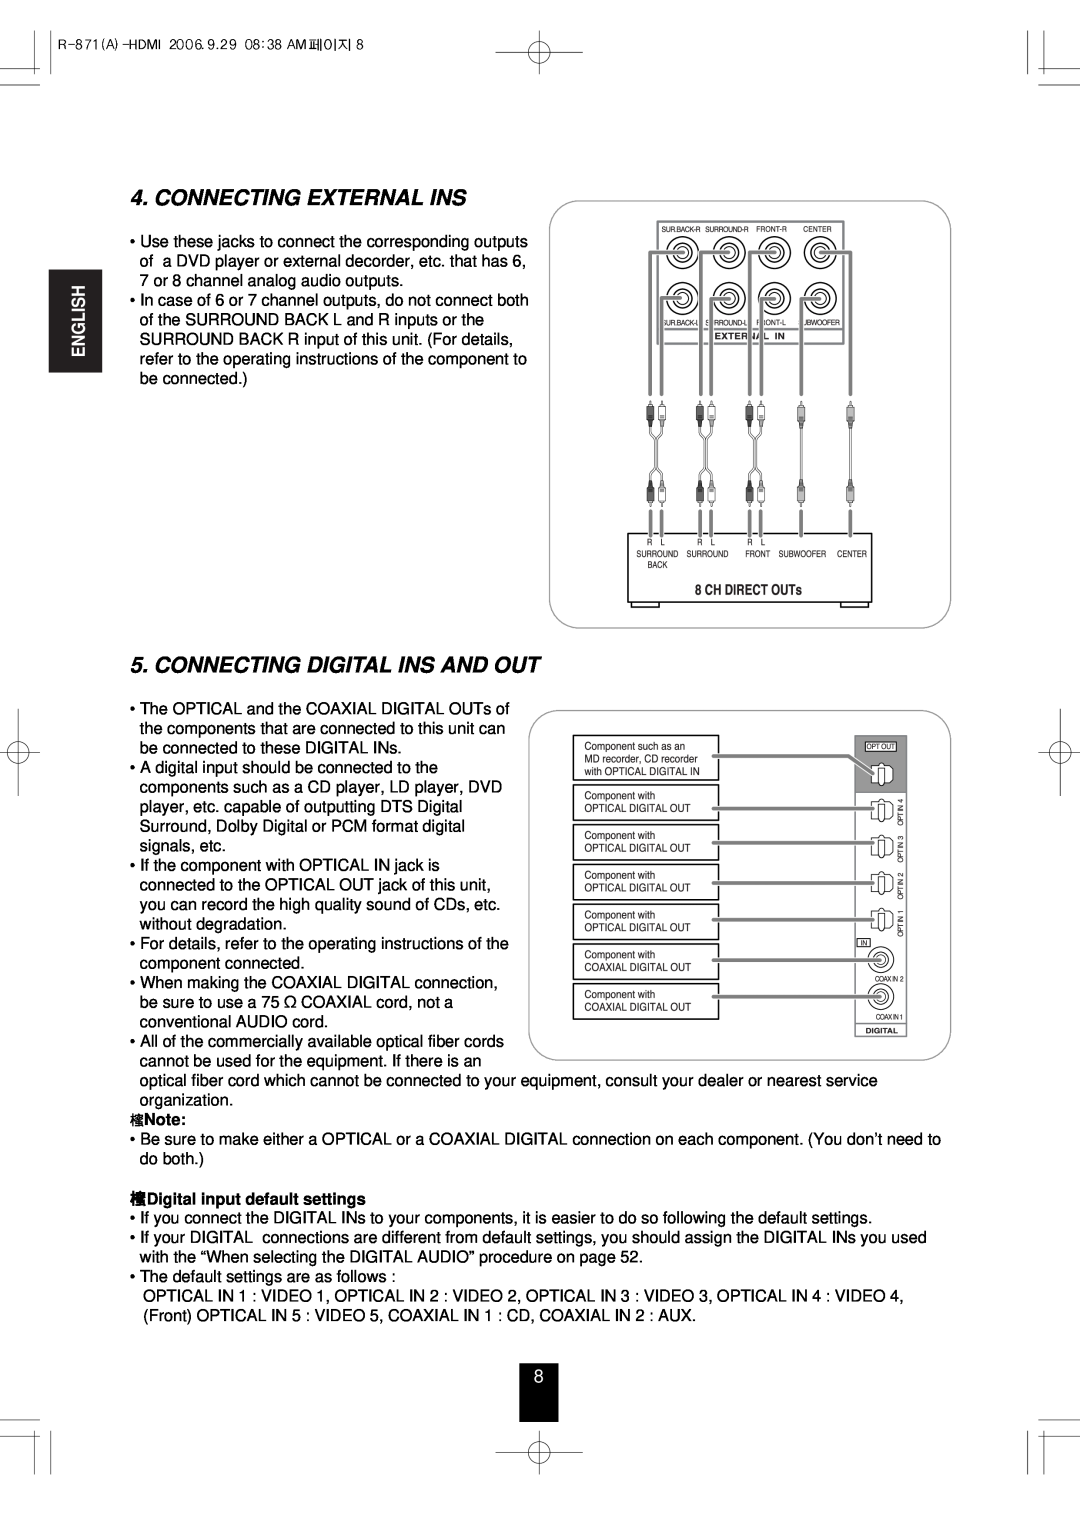 Sherwood R-871 manual Connecting External Ins, Connecting Digital Ins And Out, Digital input default settings, English 